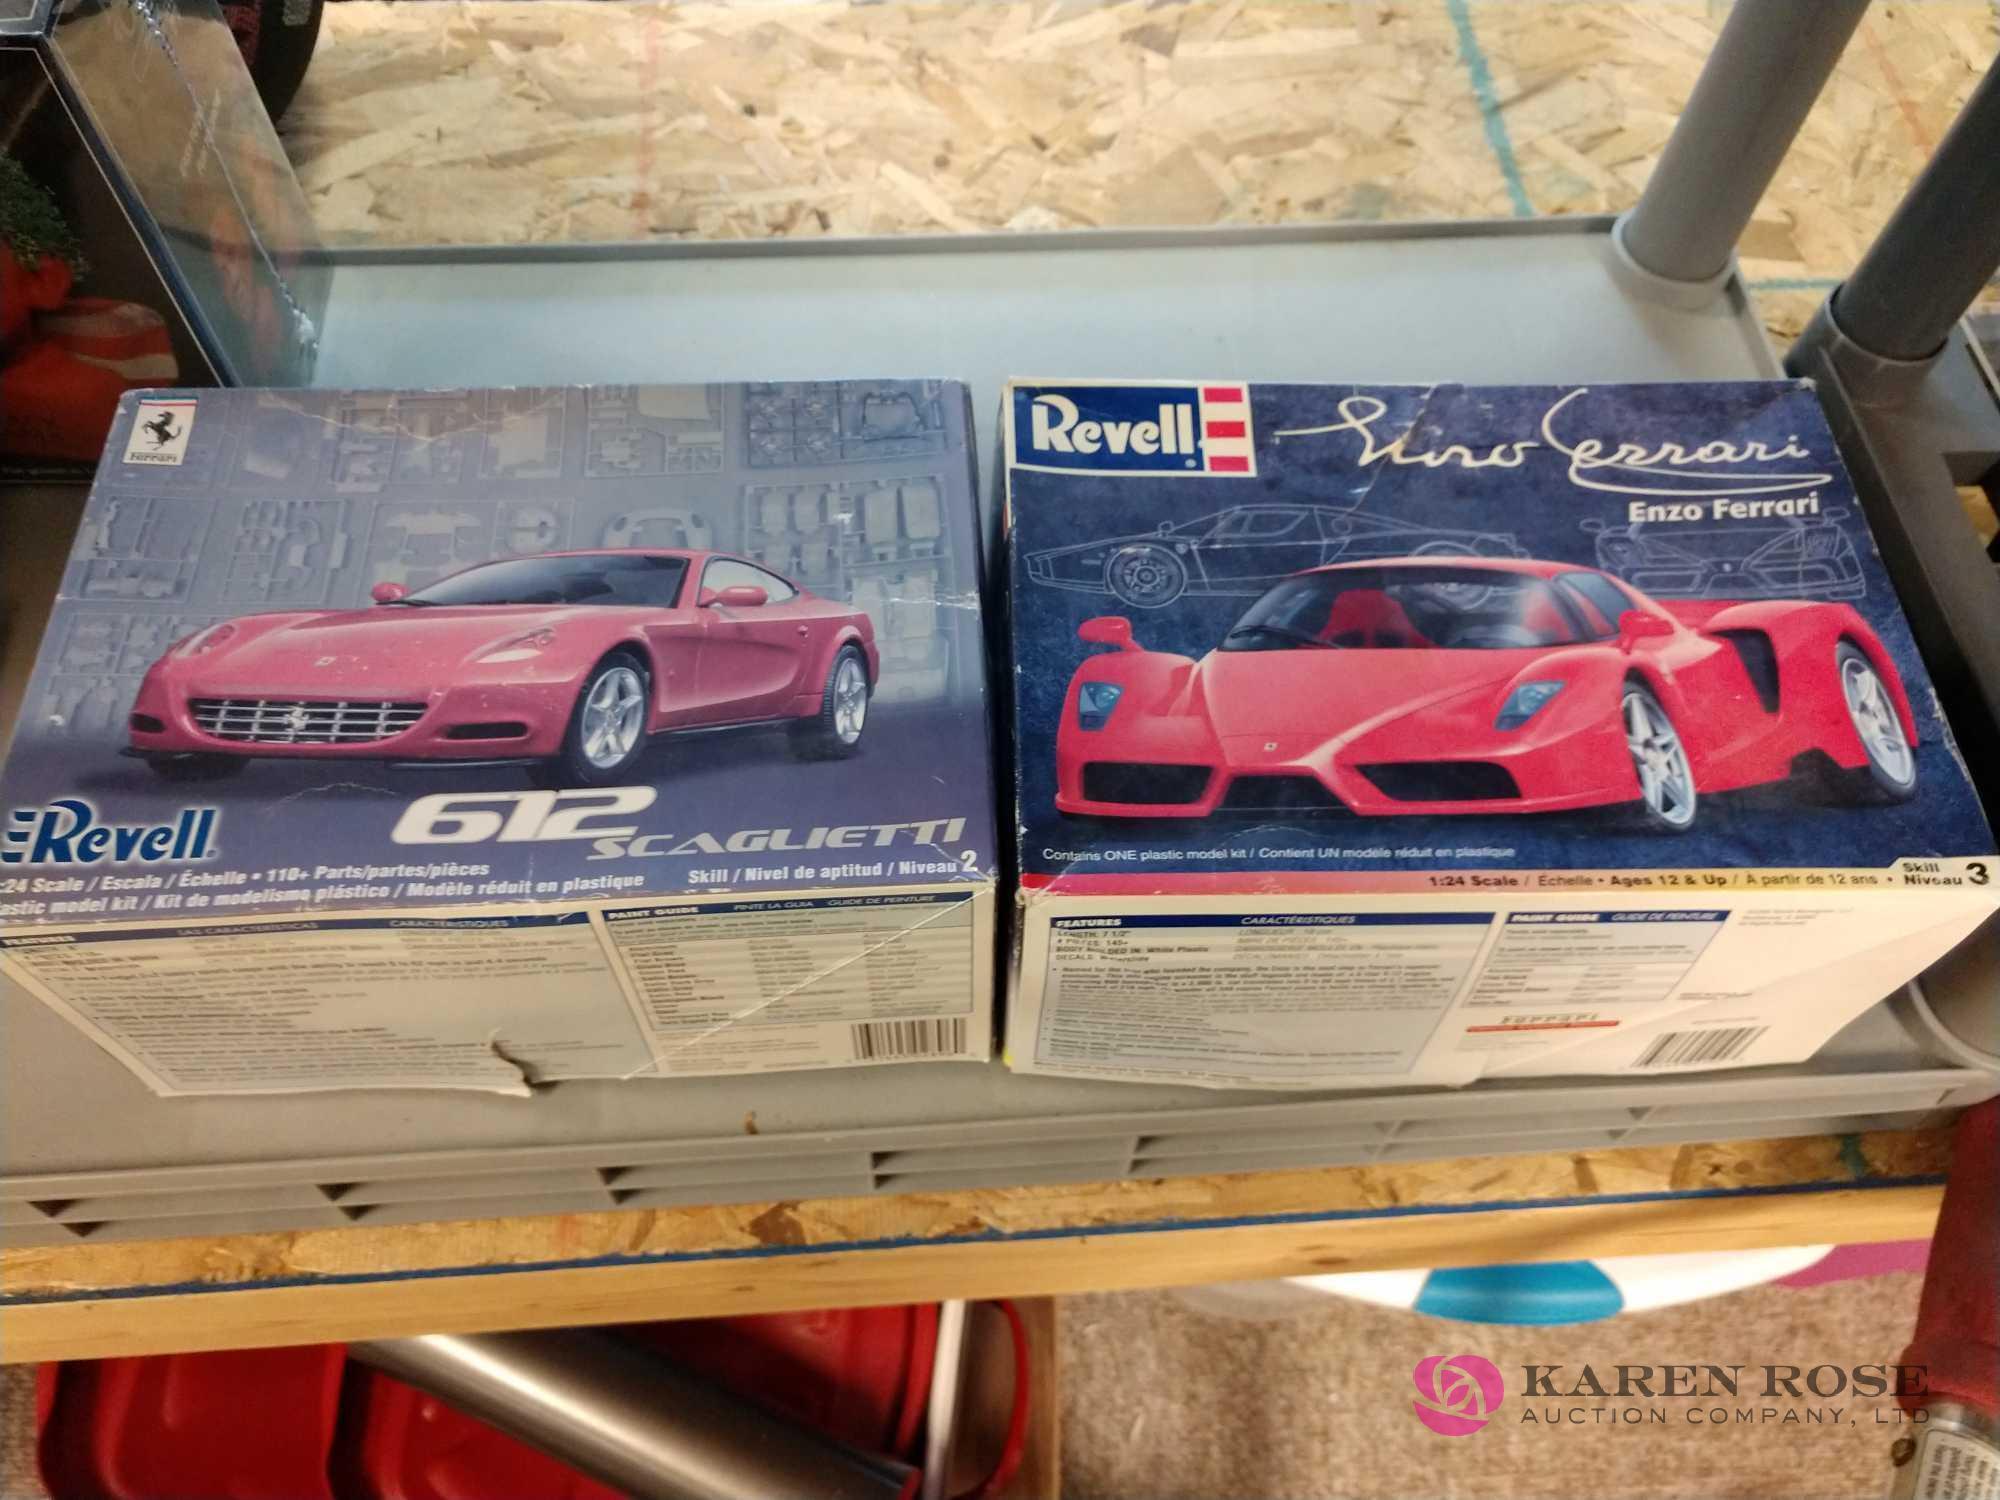 2 revell plastic model car kits